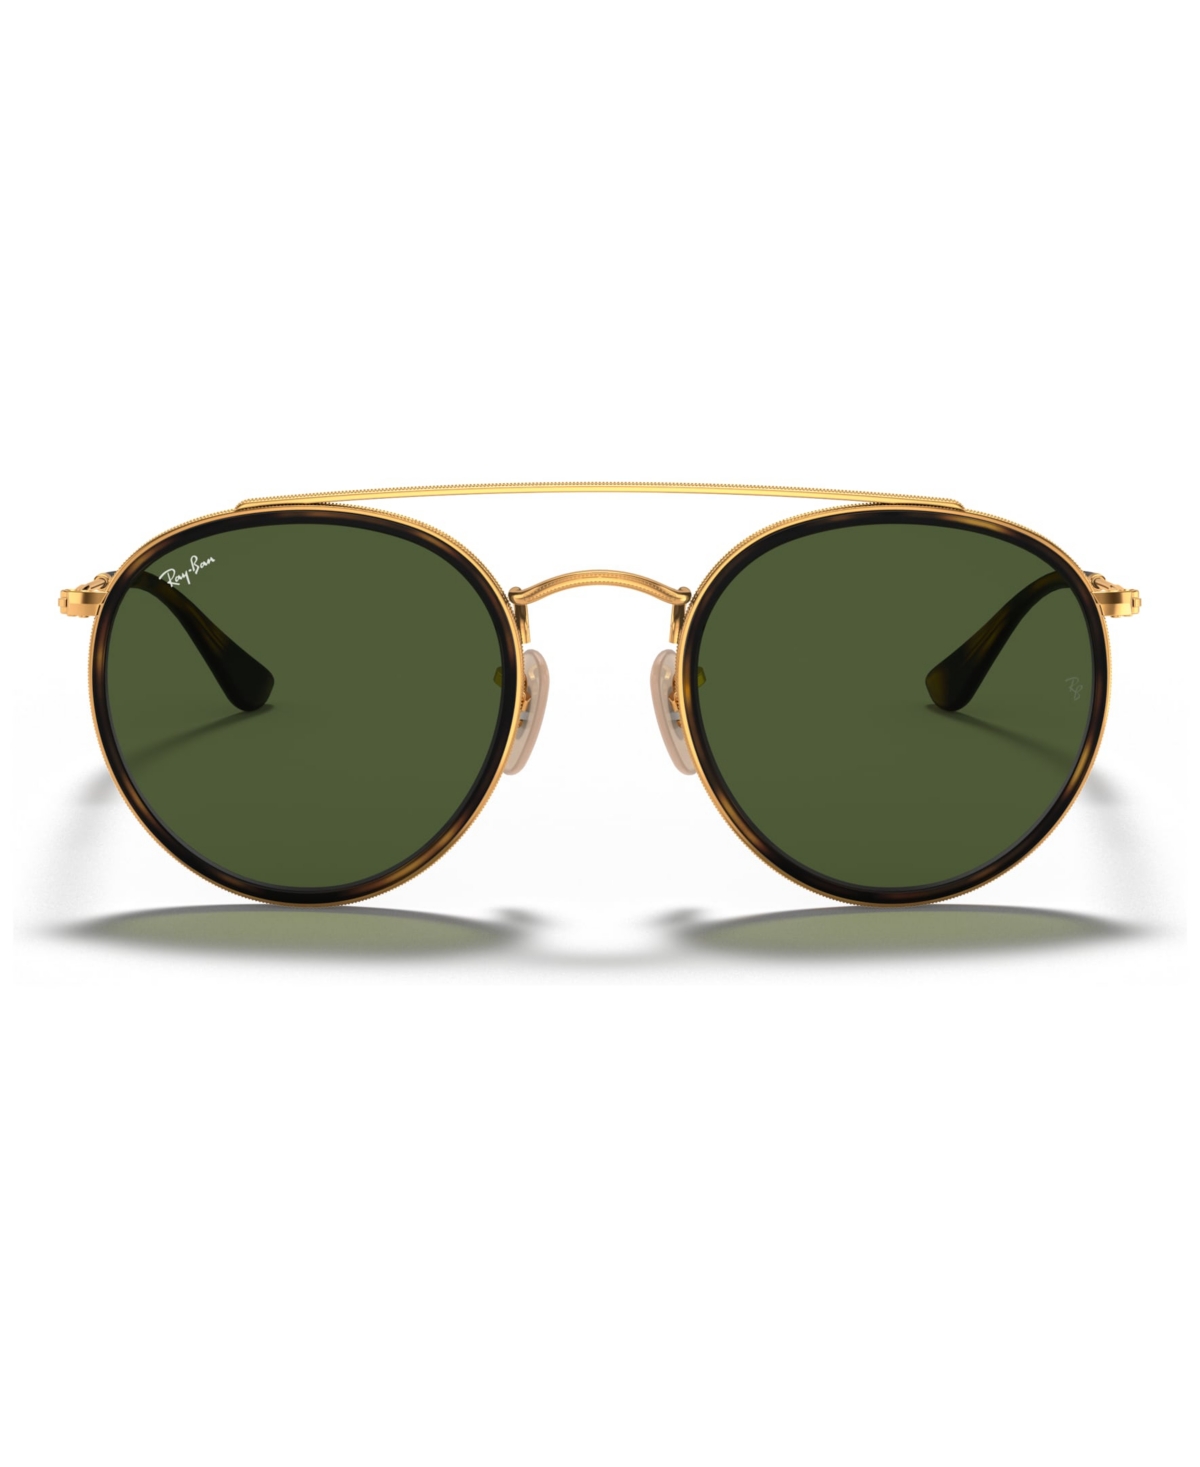 Unisex Sunglasses, RB3647N - GOLD/GREEN